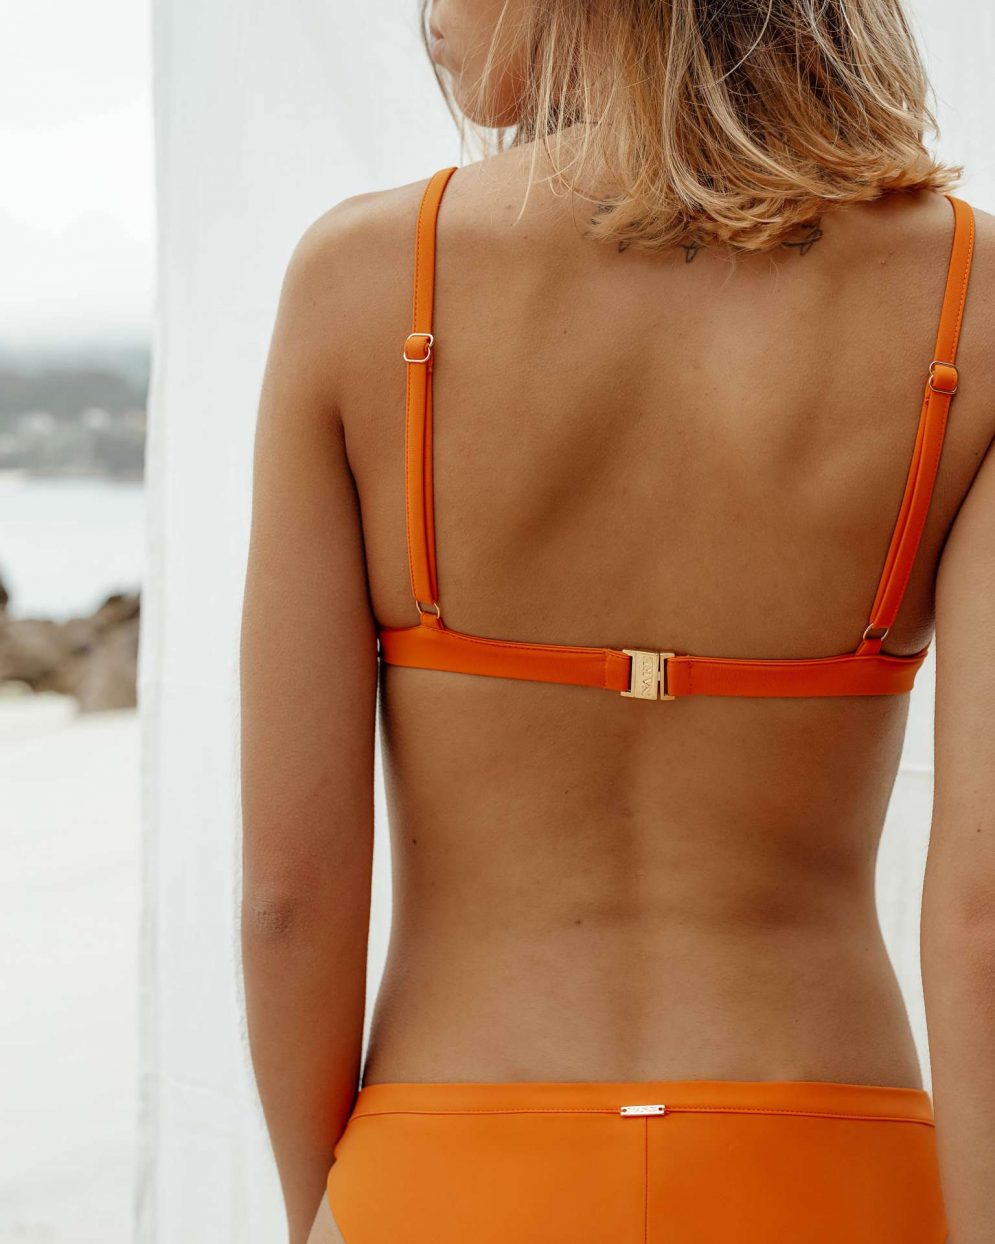 Bikini Falesia Naranja de NARE® Swimwear - Vista trasera